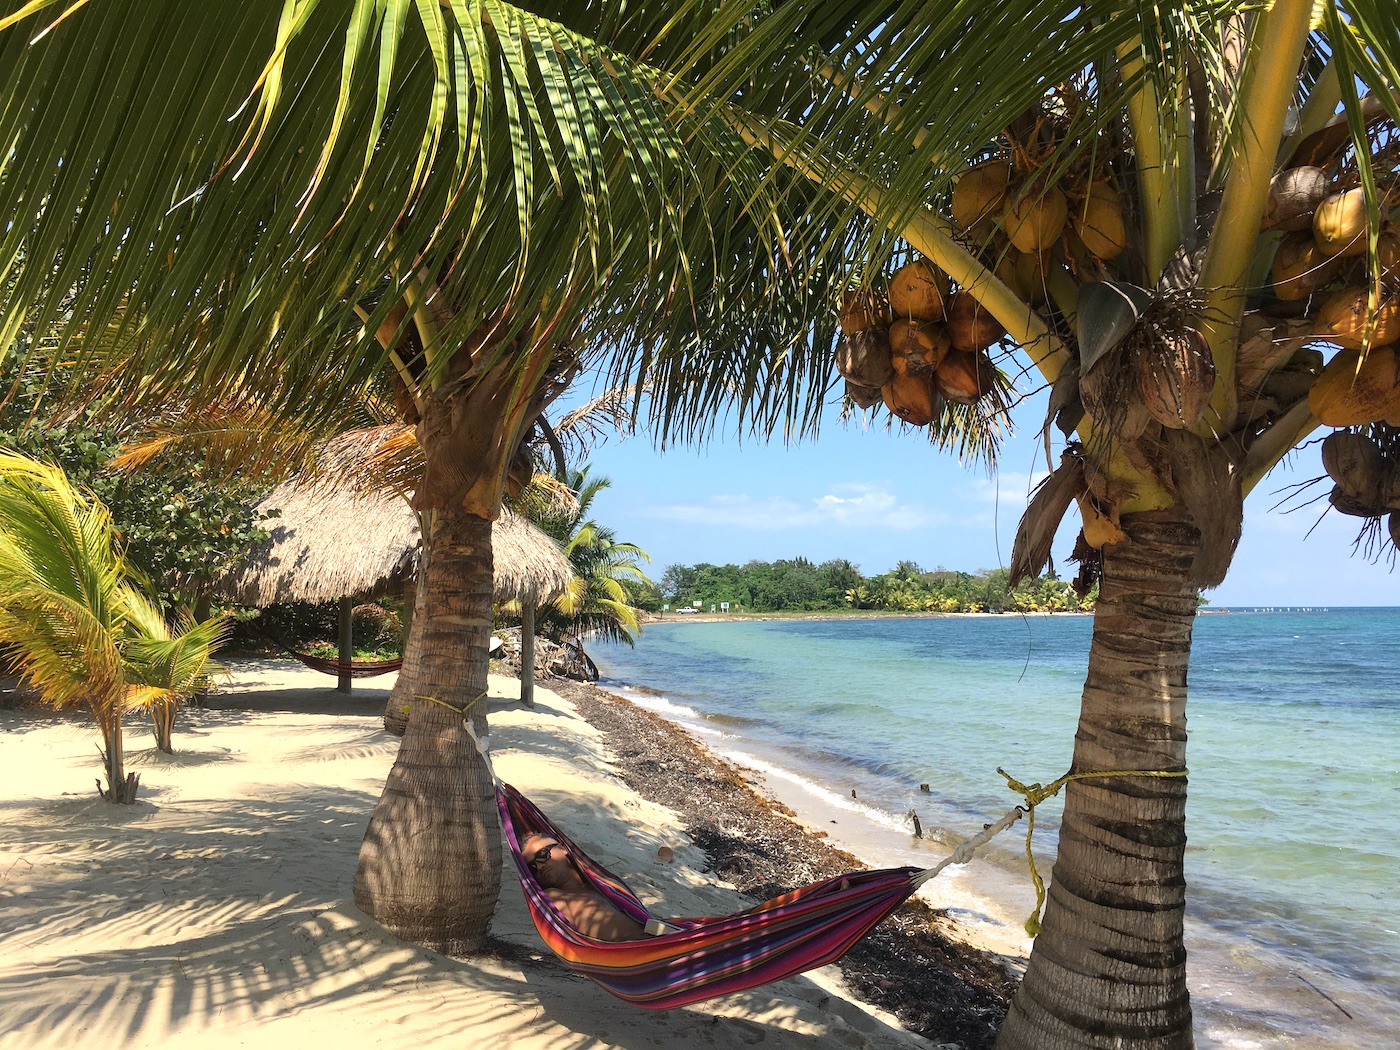 Lost on the hammock in Belize